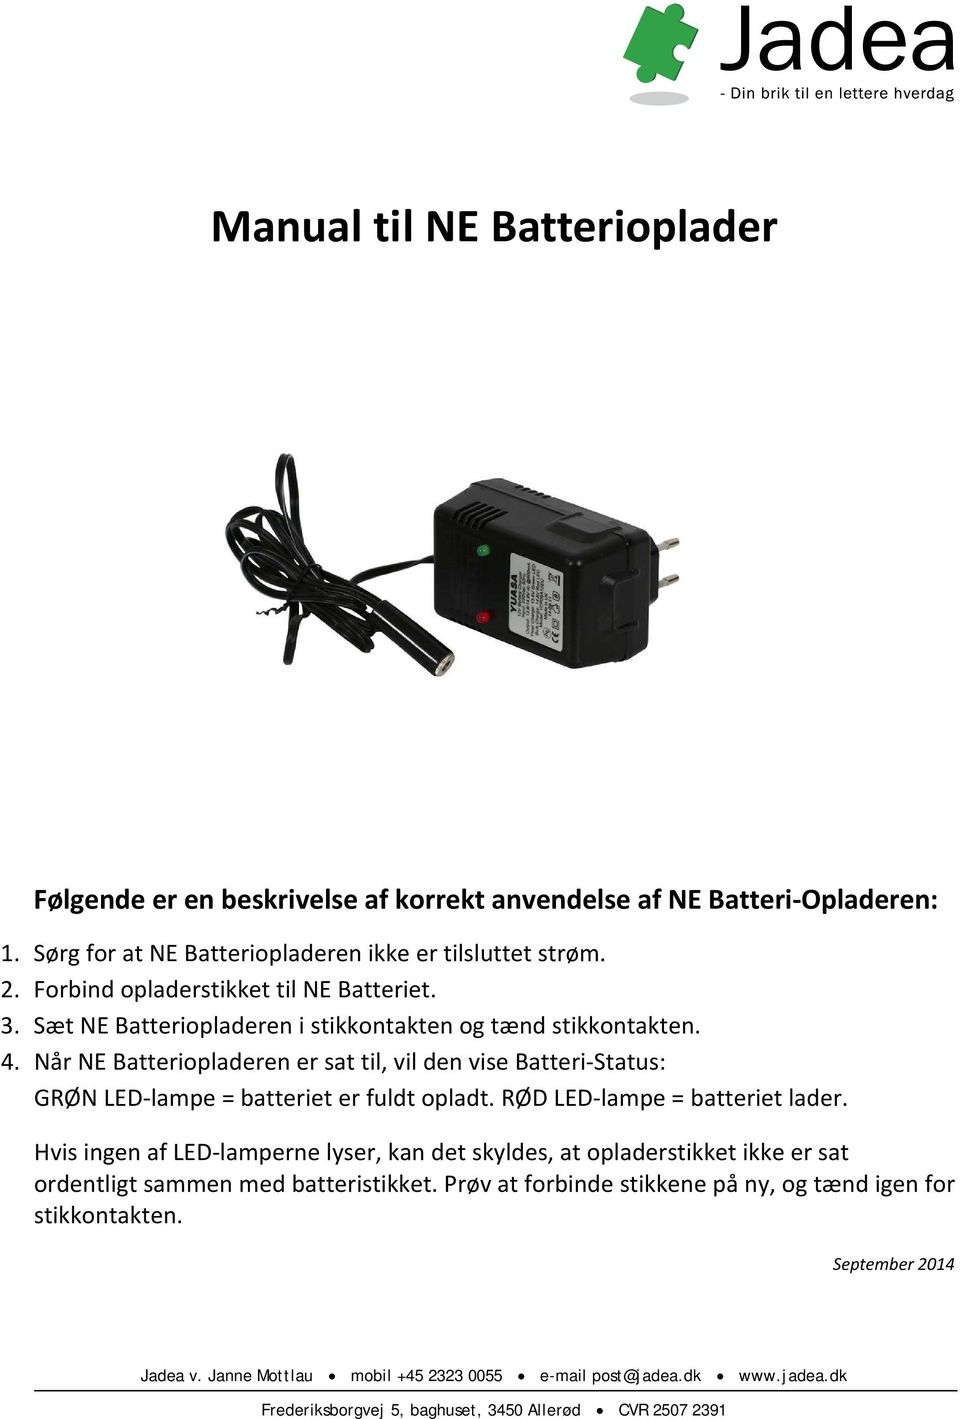 Når NE Batteriopladeren er sat til, vil den vise Batteri Status: GRØN LED lampe = batteriet er fuldt opladt. RØD LED lampe = batteriet lader.